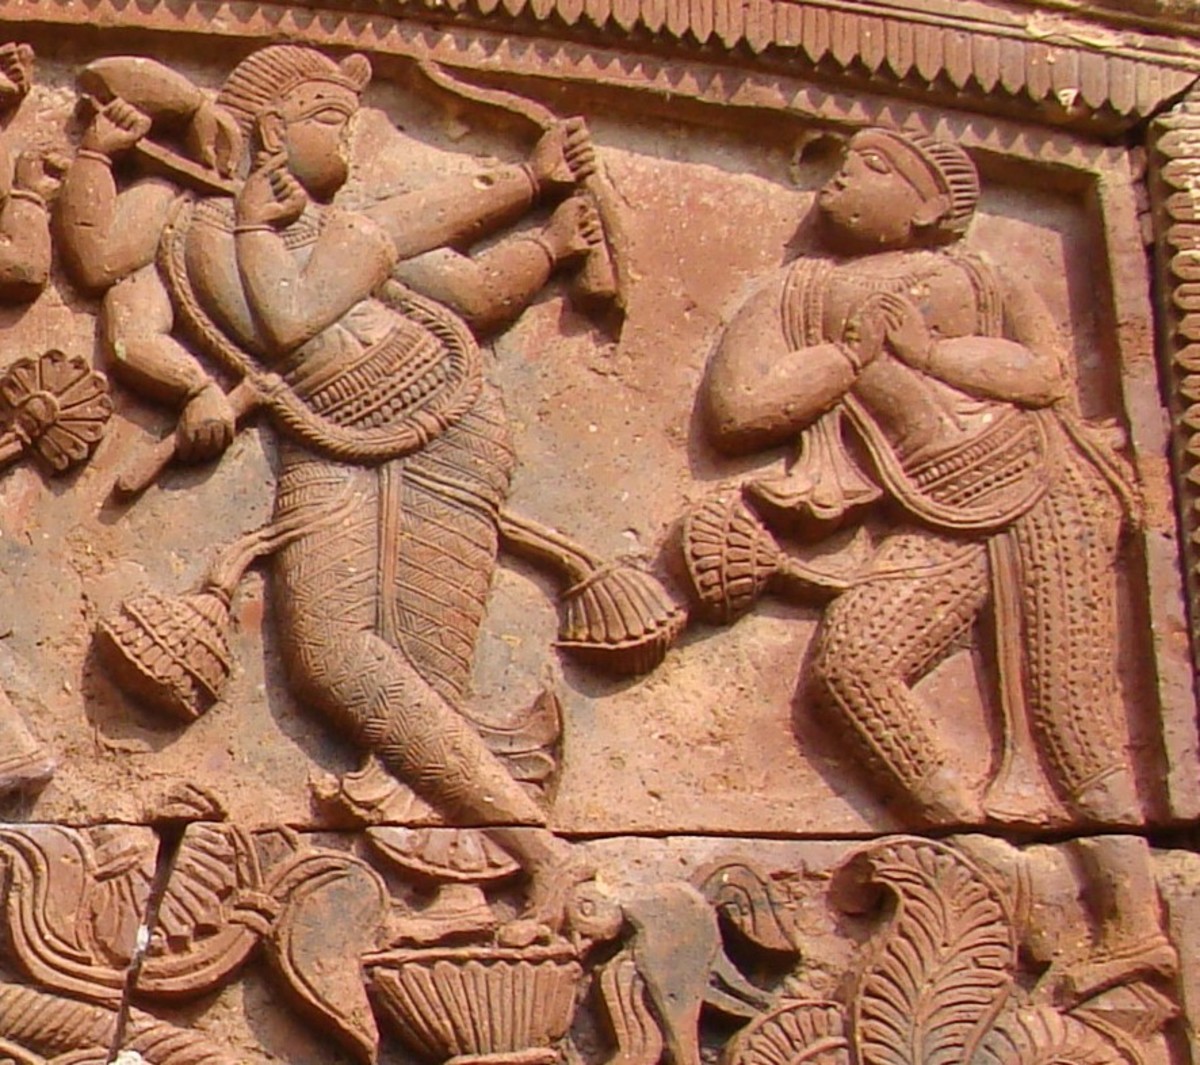 Shadbhuja Gauranga in stone work, Shiva temple, Ganpur. There is a single person accompanying Shadbbhuja Gauranga.